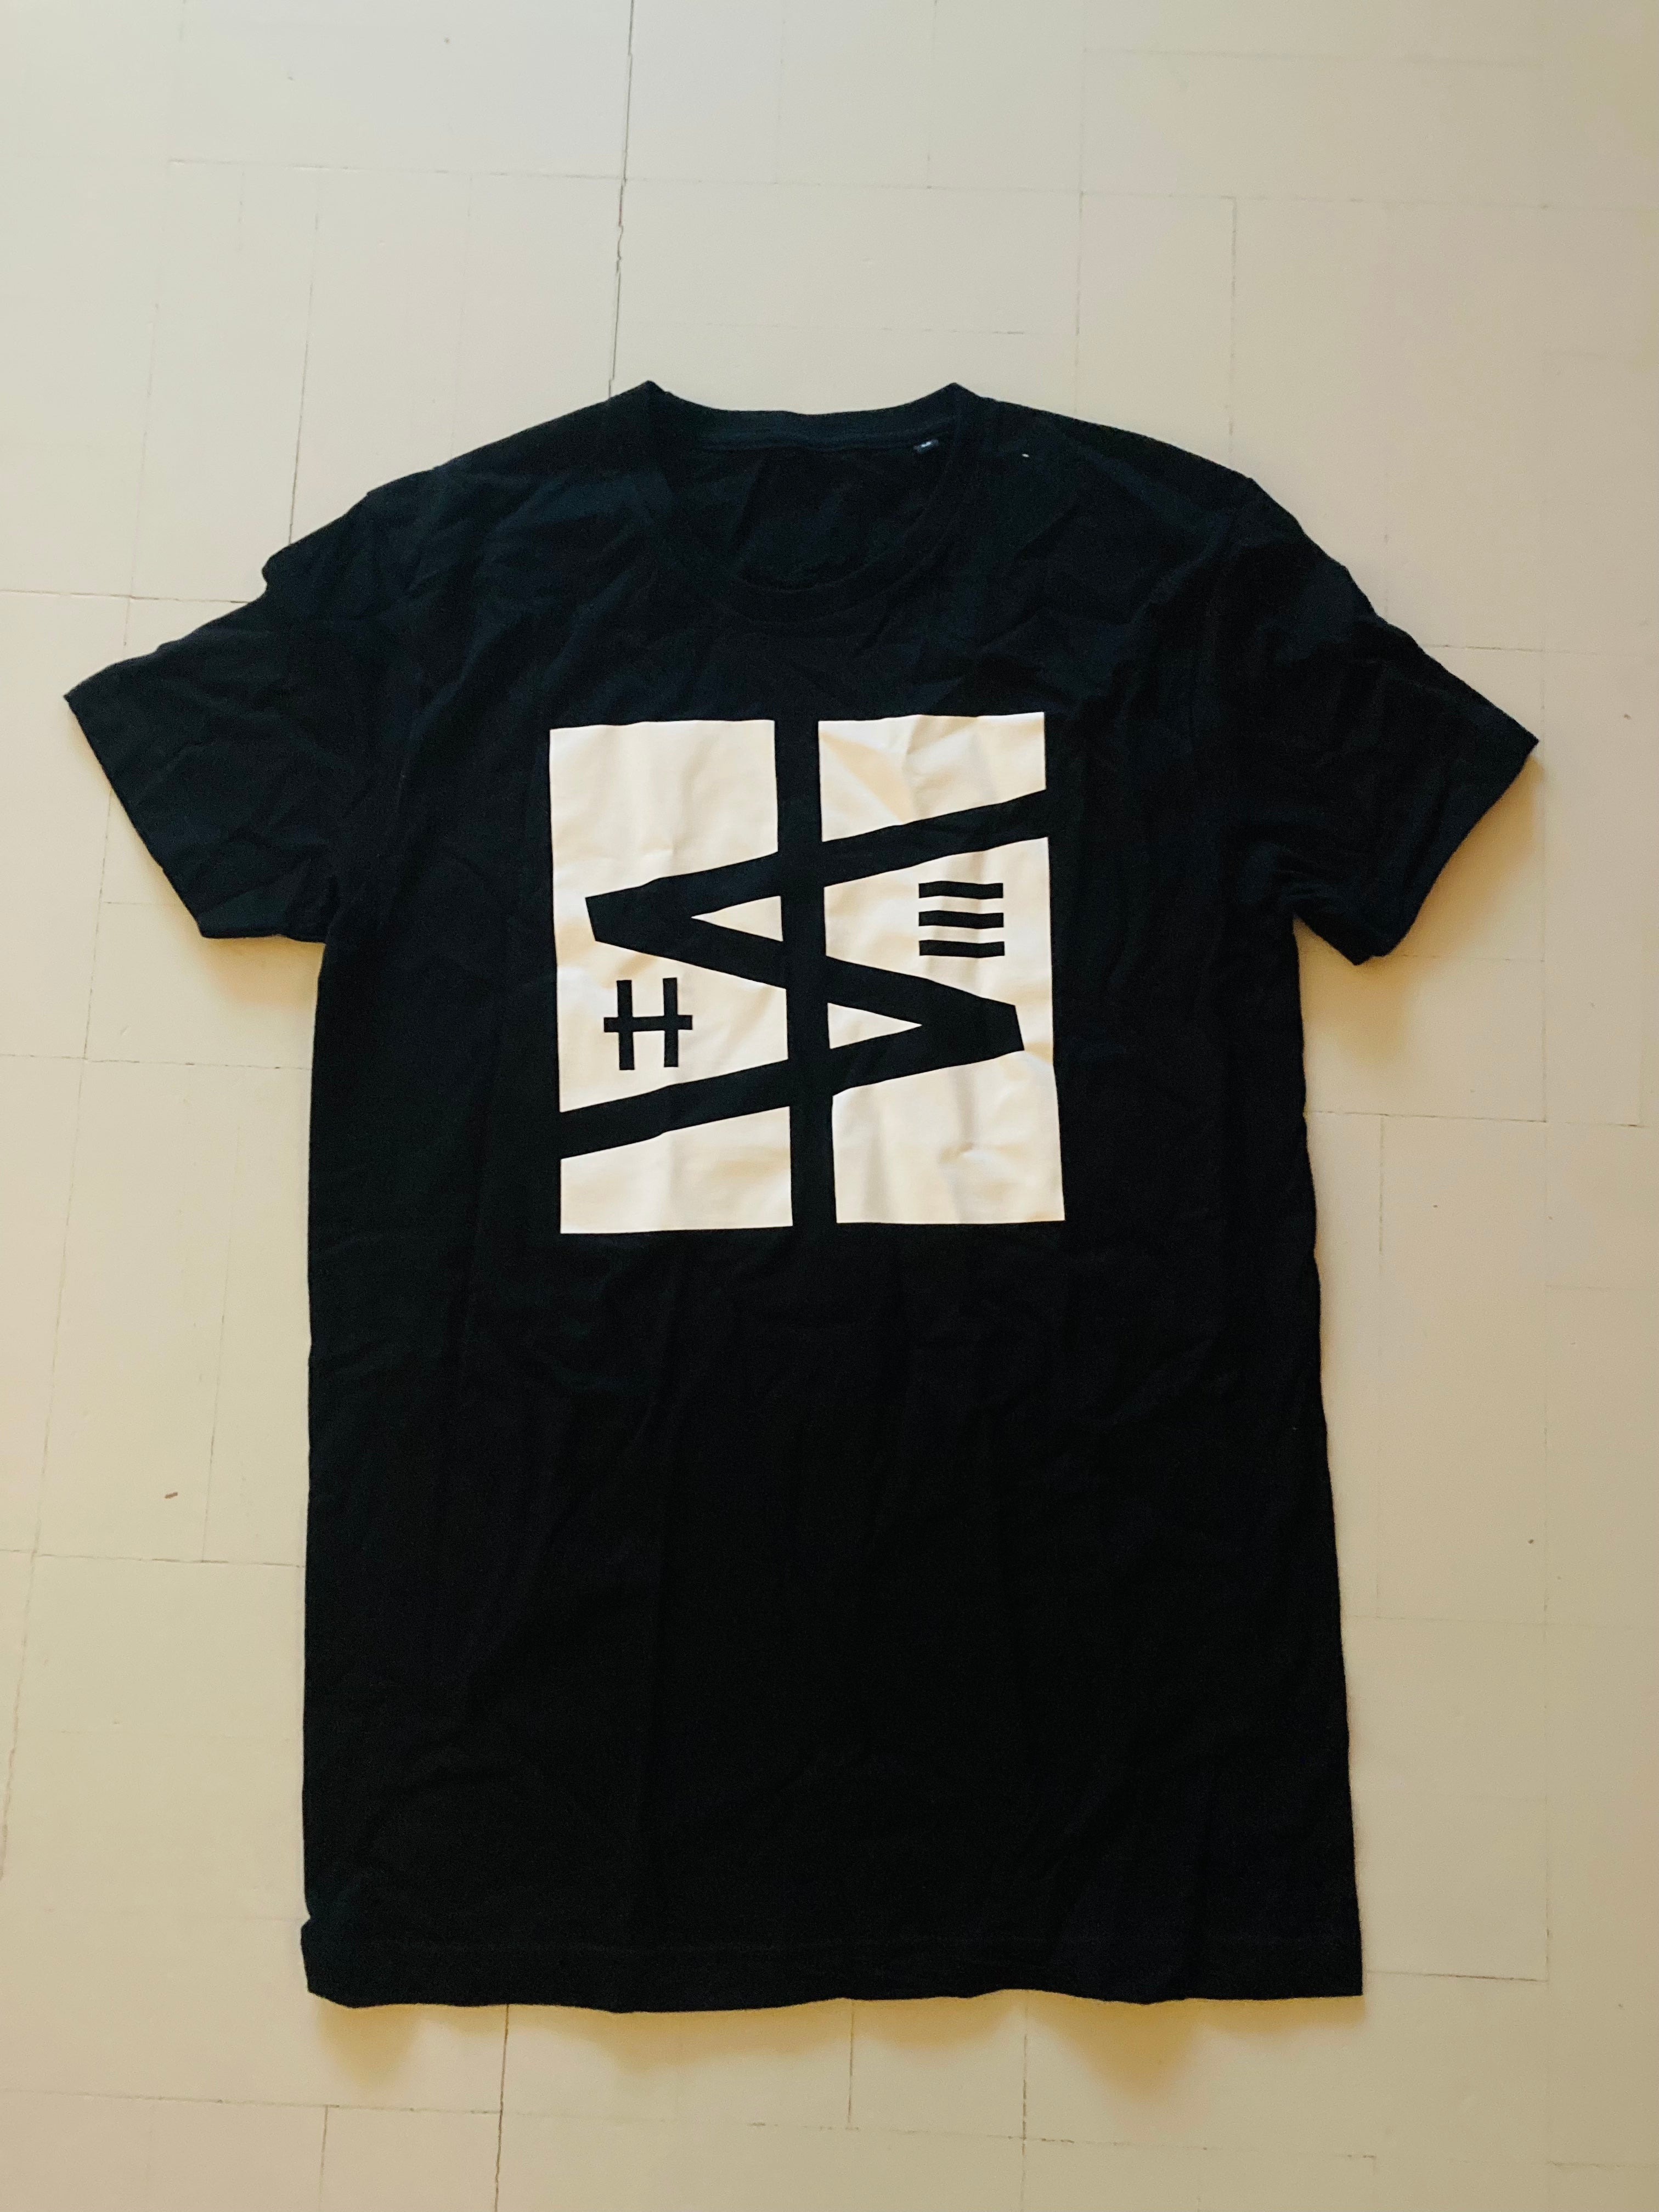 This Is Head - Logo - T-shirt (Black)